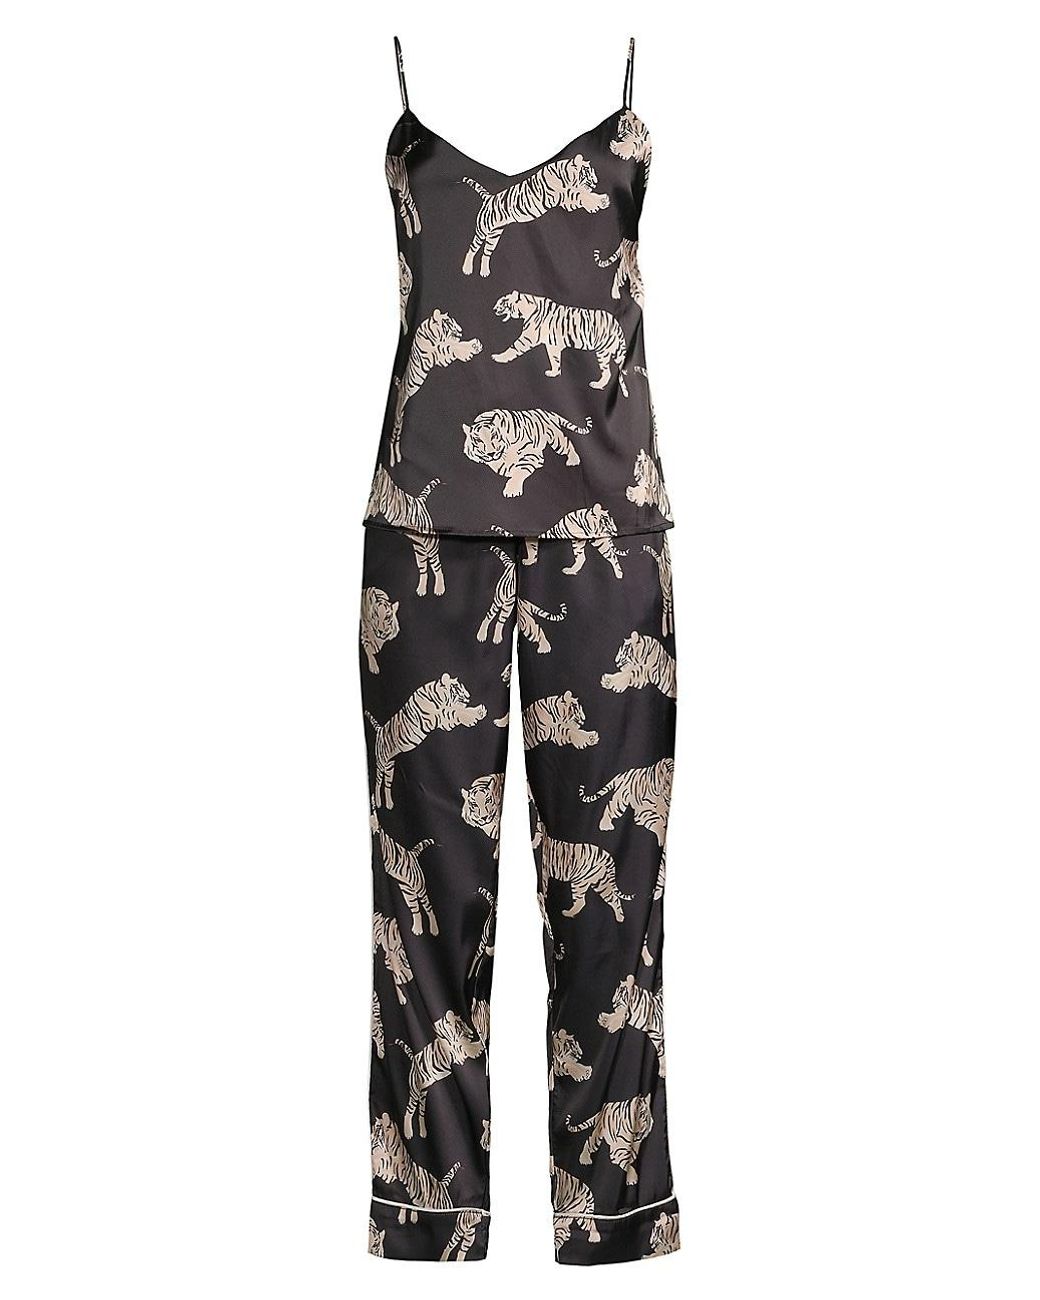 Averie - Short-Sleeve Shirt & Shorts Silk Pajama Set - Women's S / Tigers